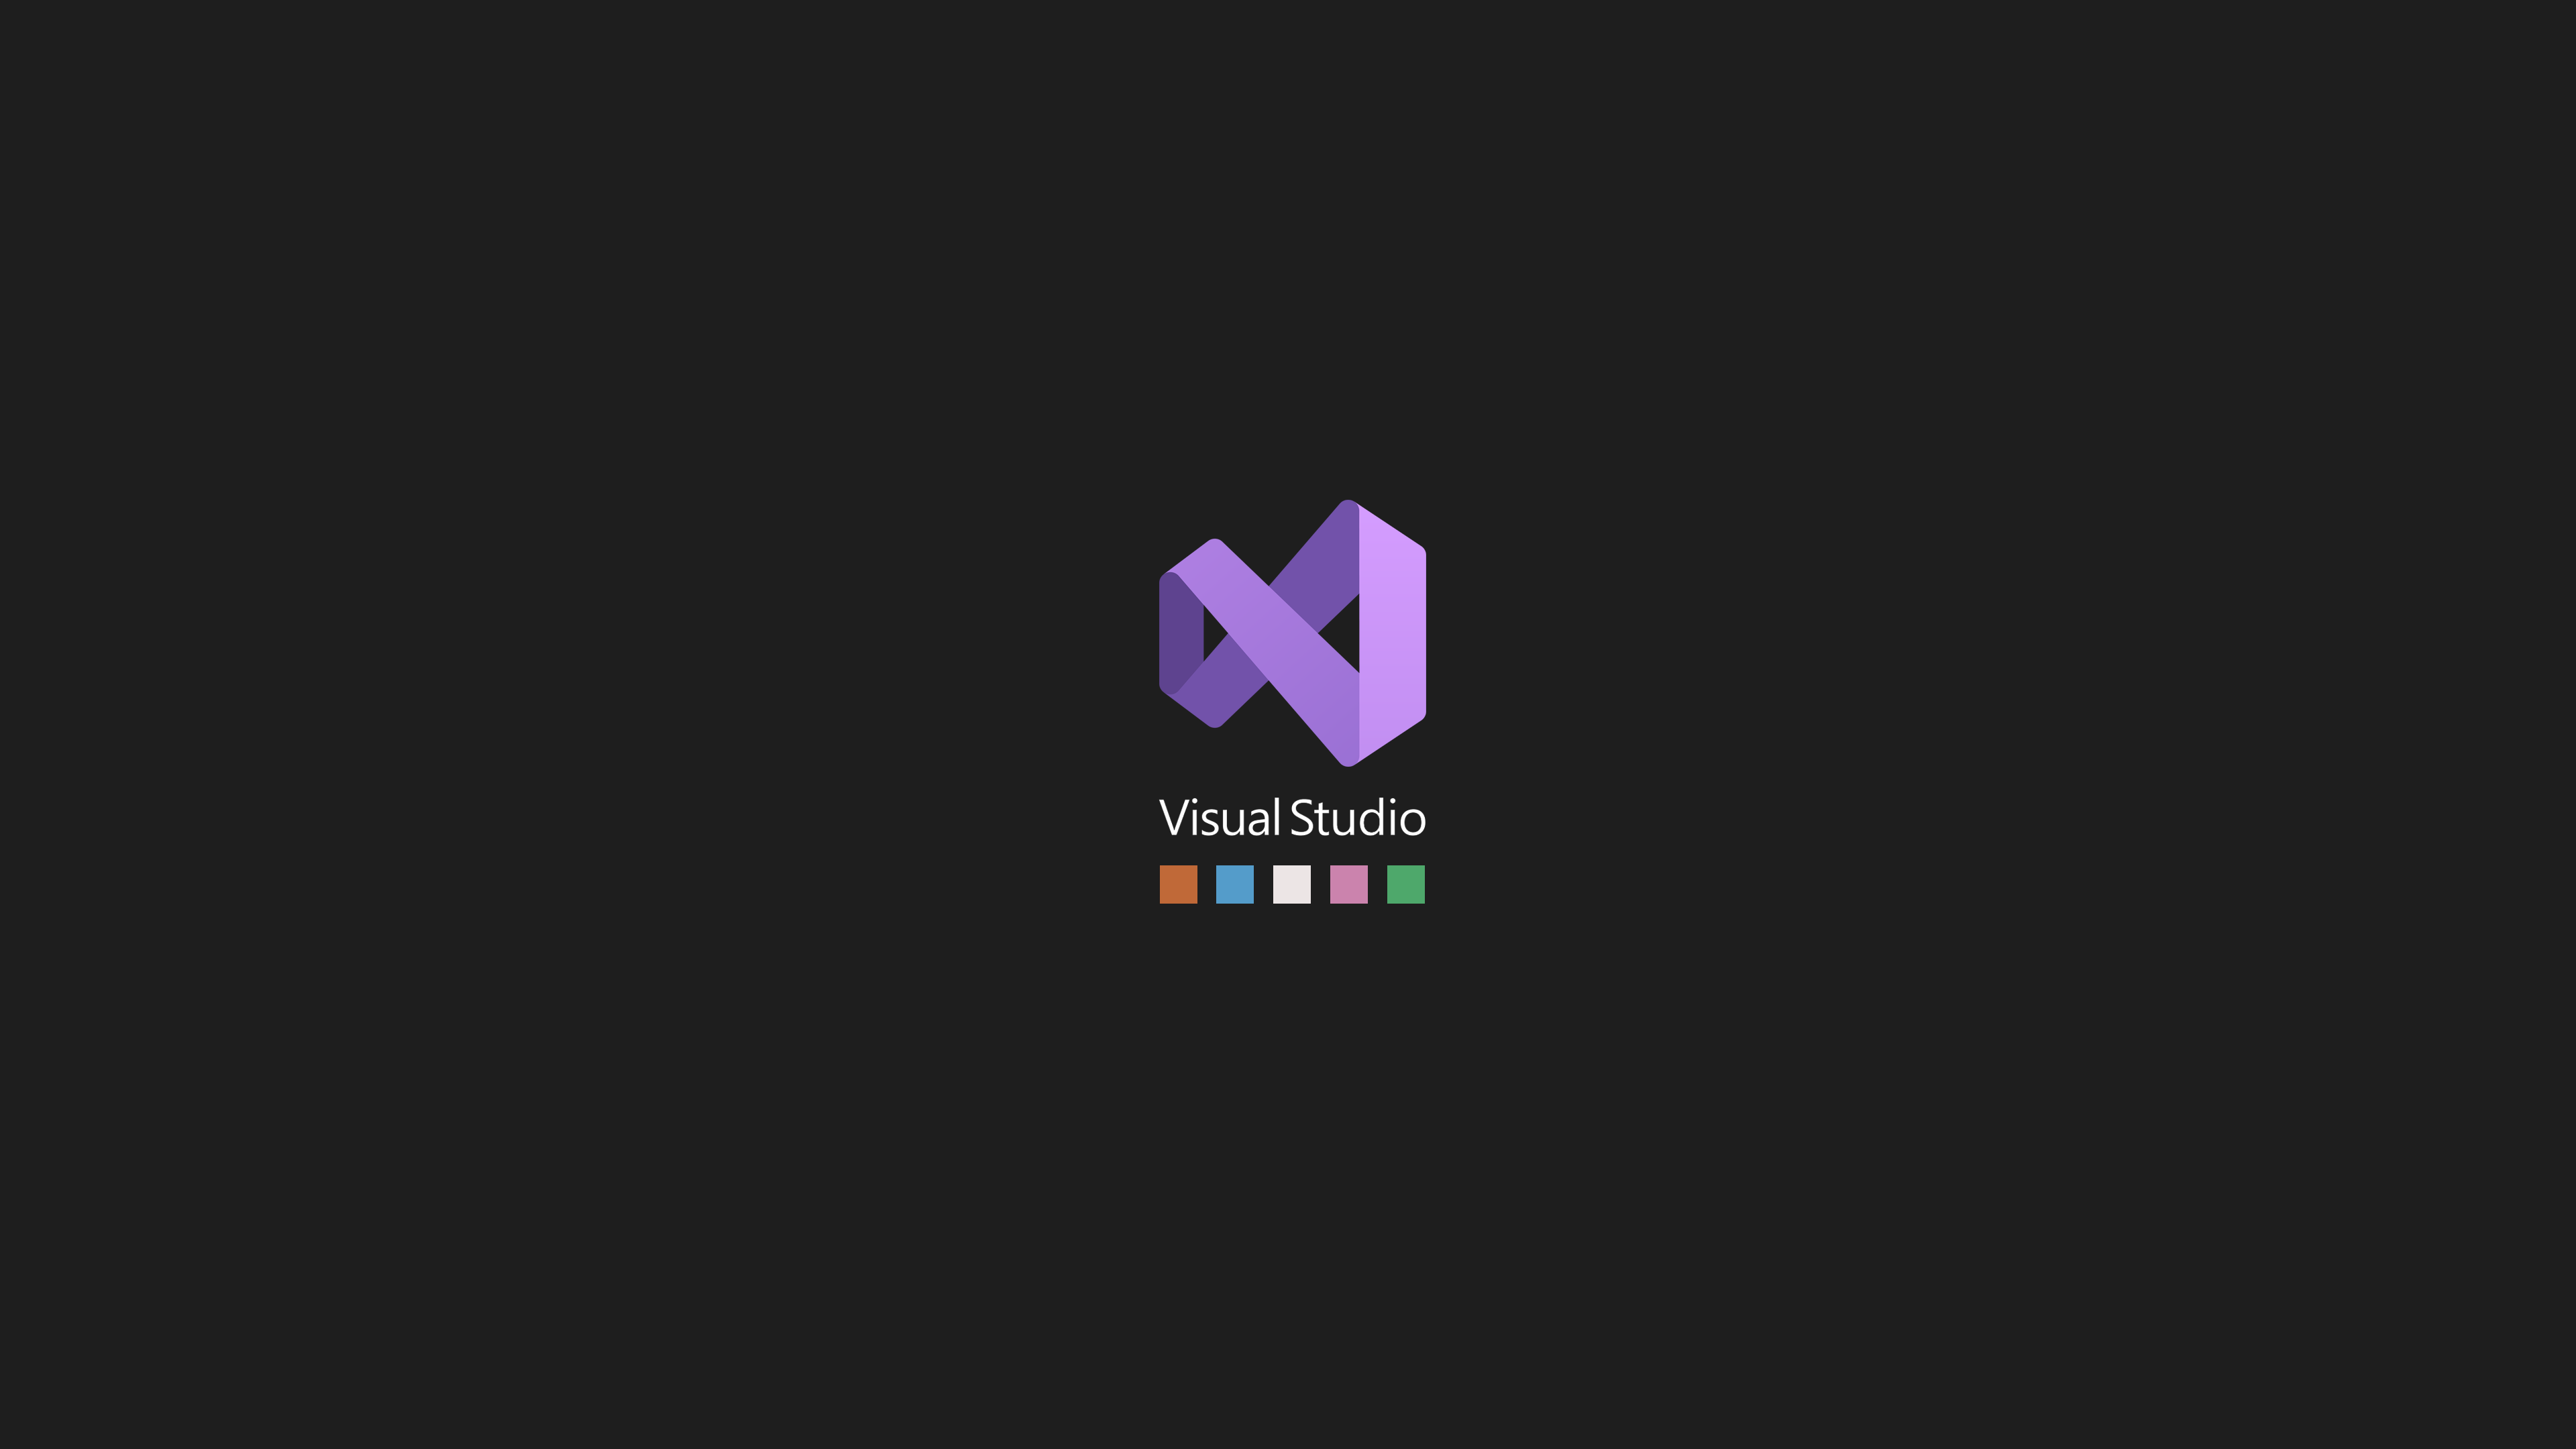 General 3840x2160 Visual Studio Microsoft programming software minimalism simple background logo